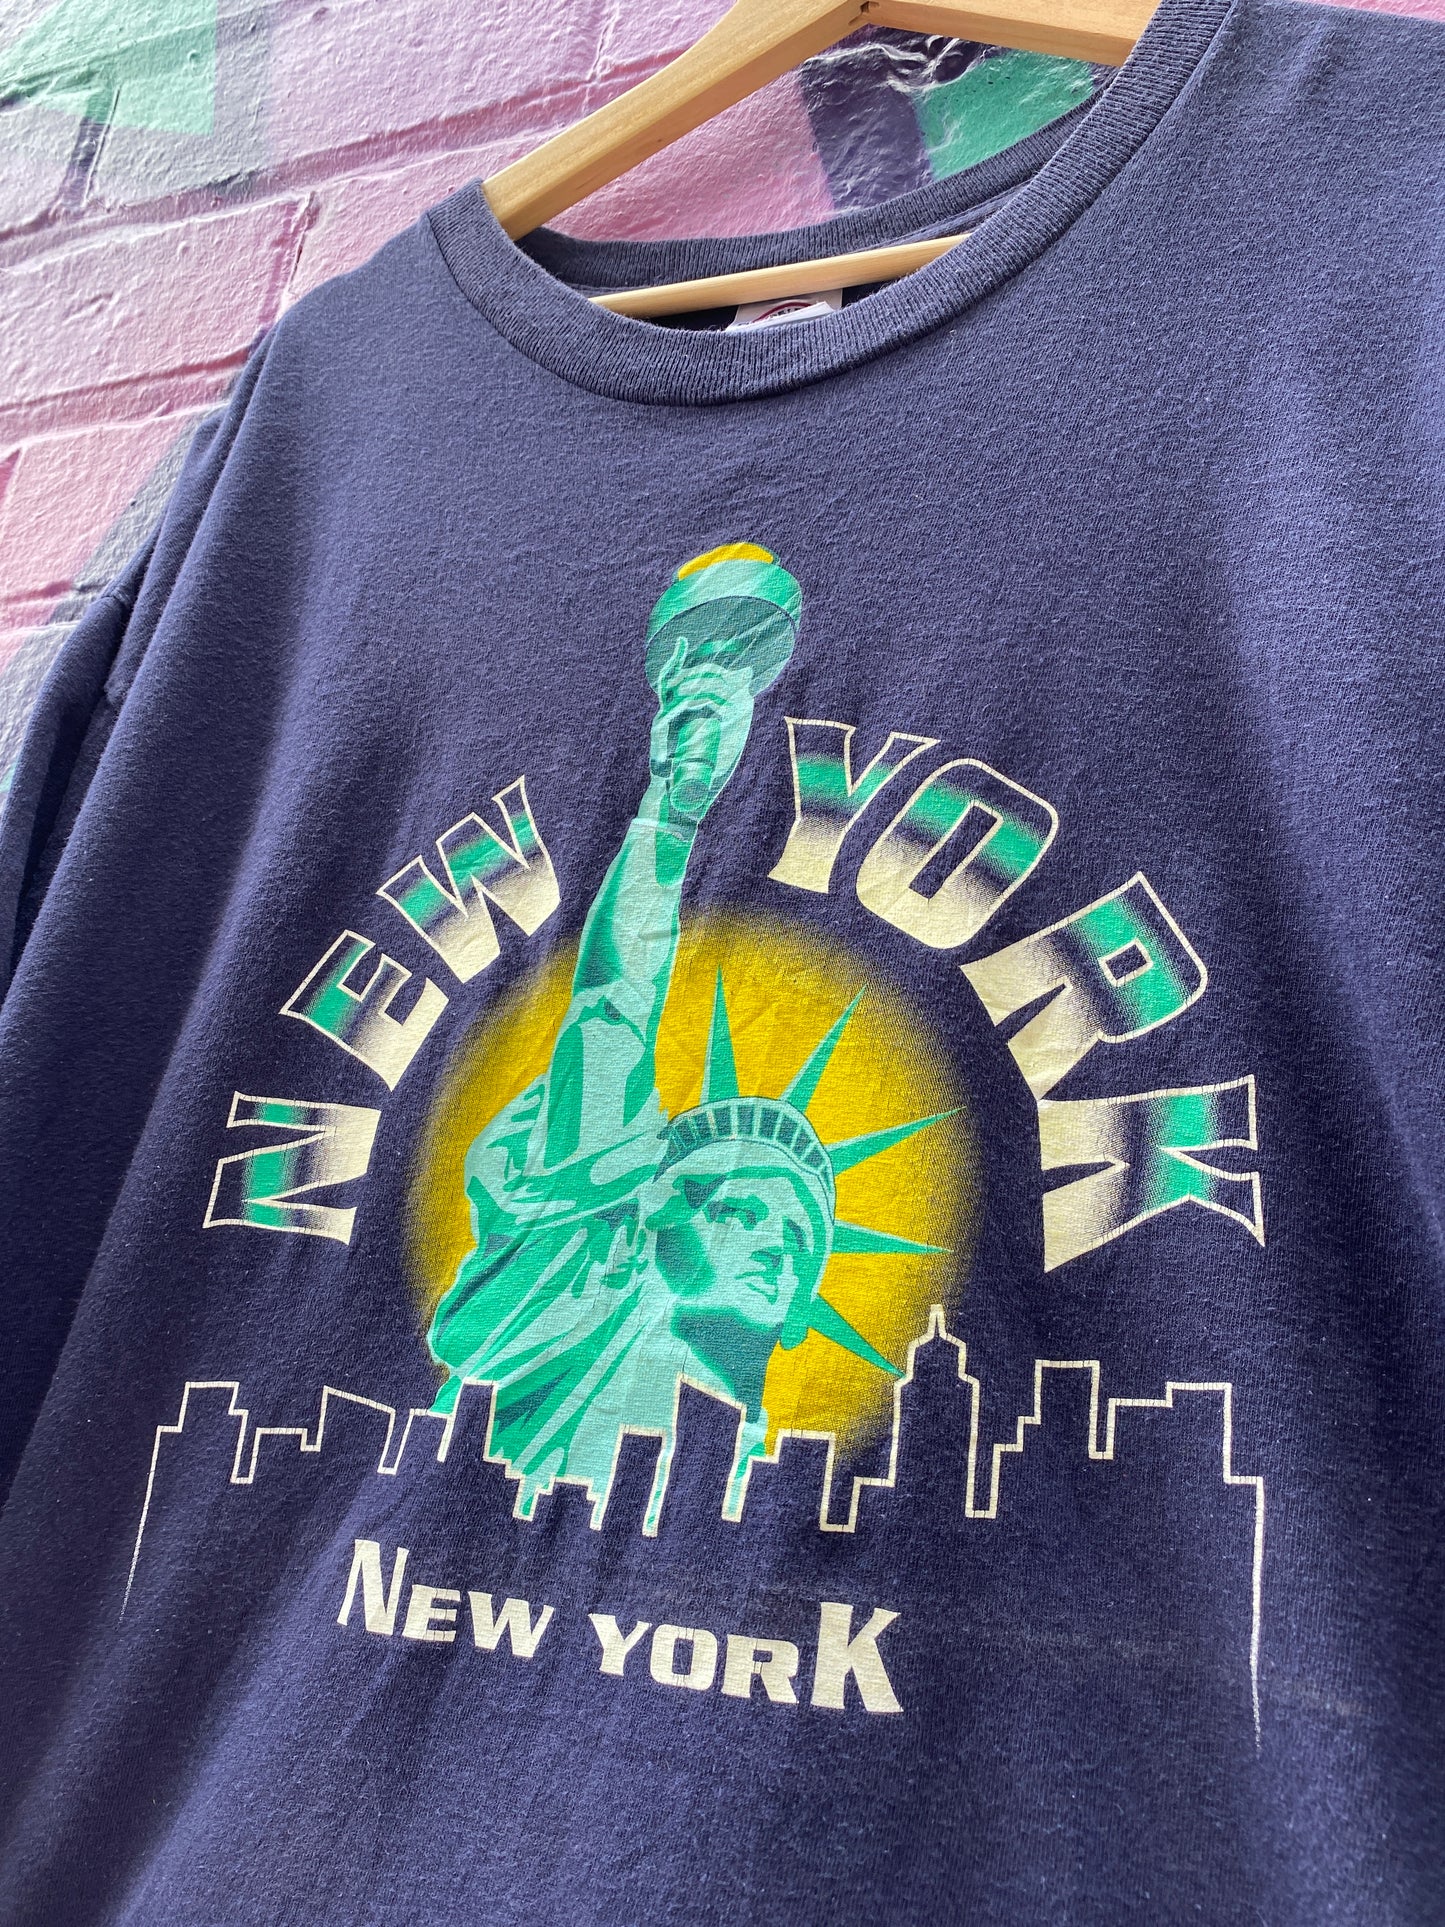 XL - New York, New York Statue Of Liberty